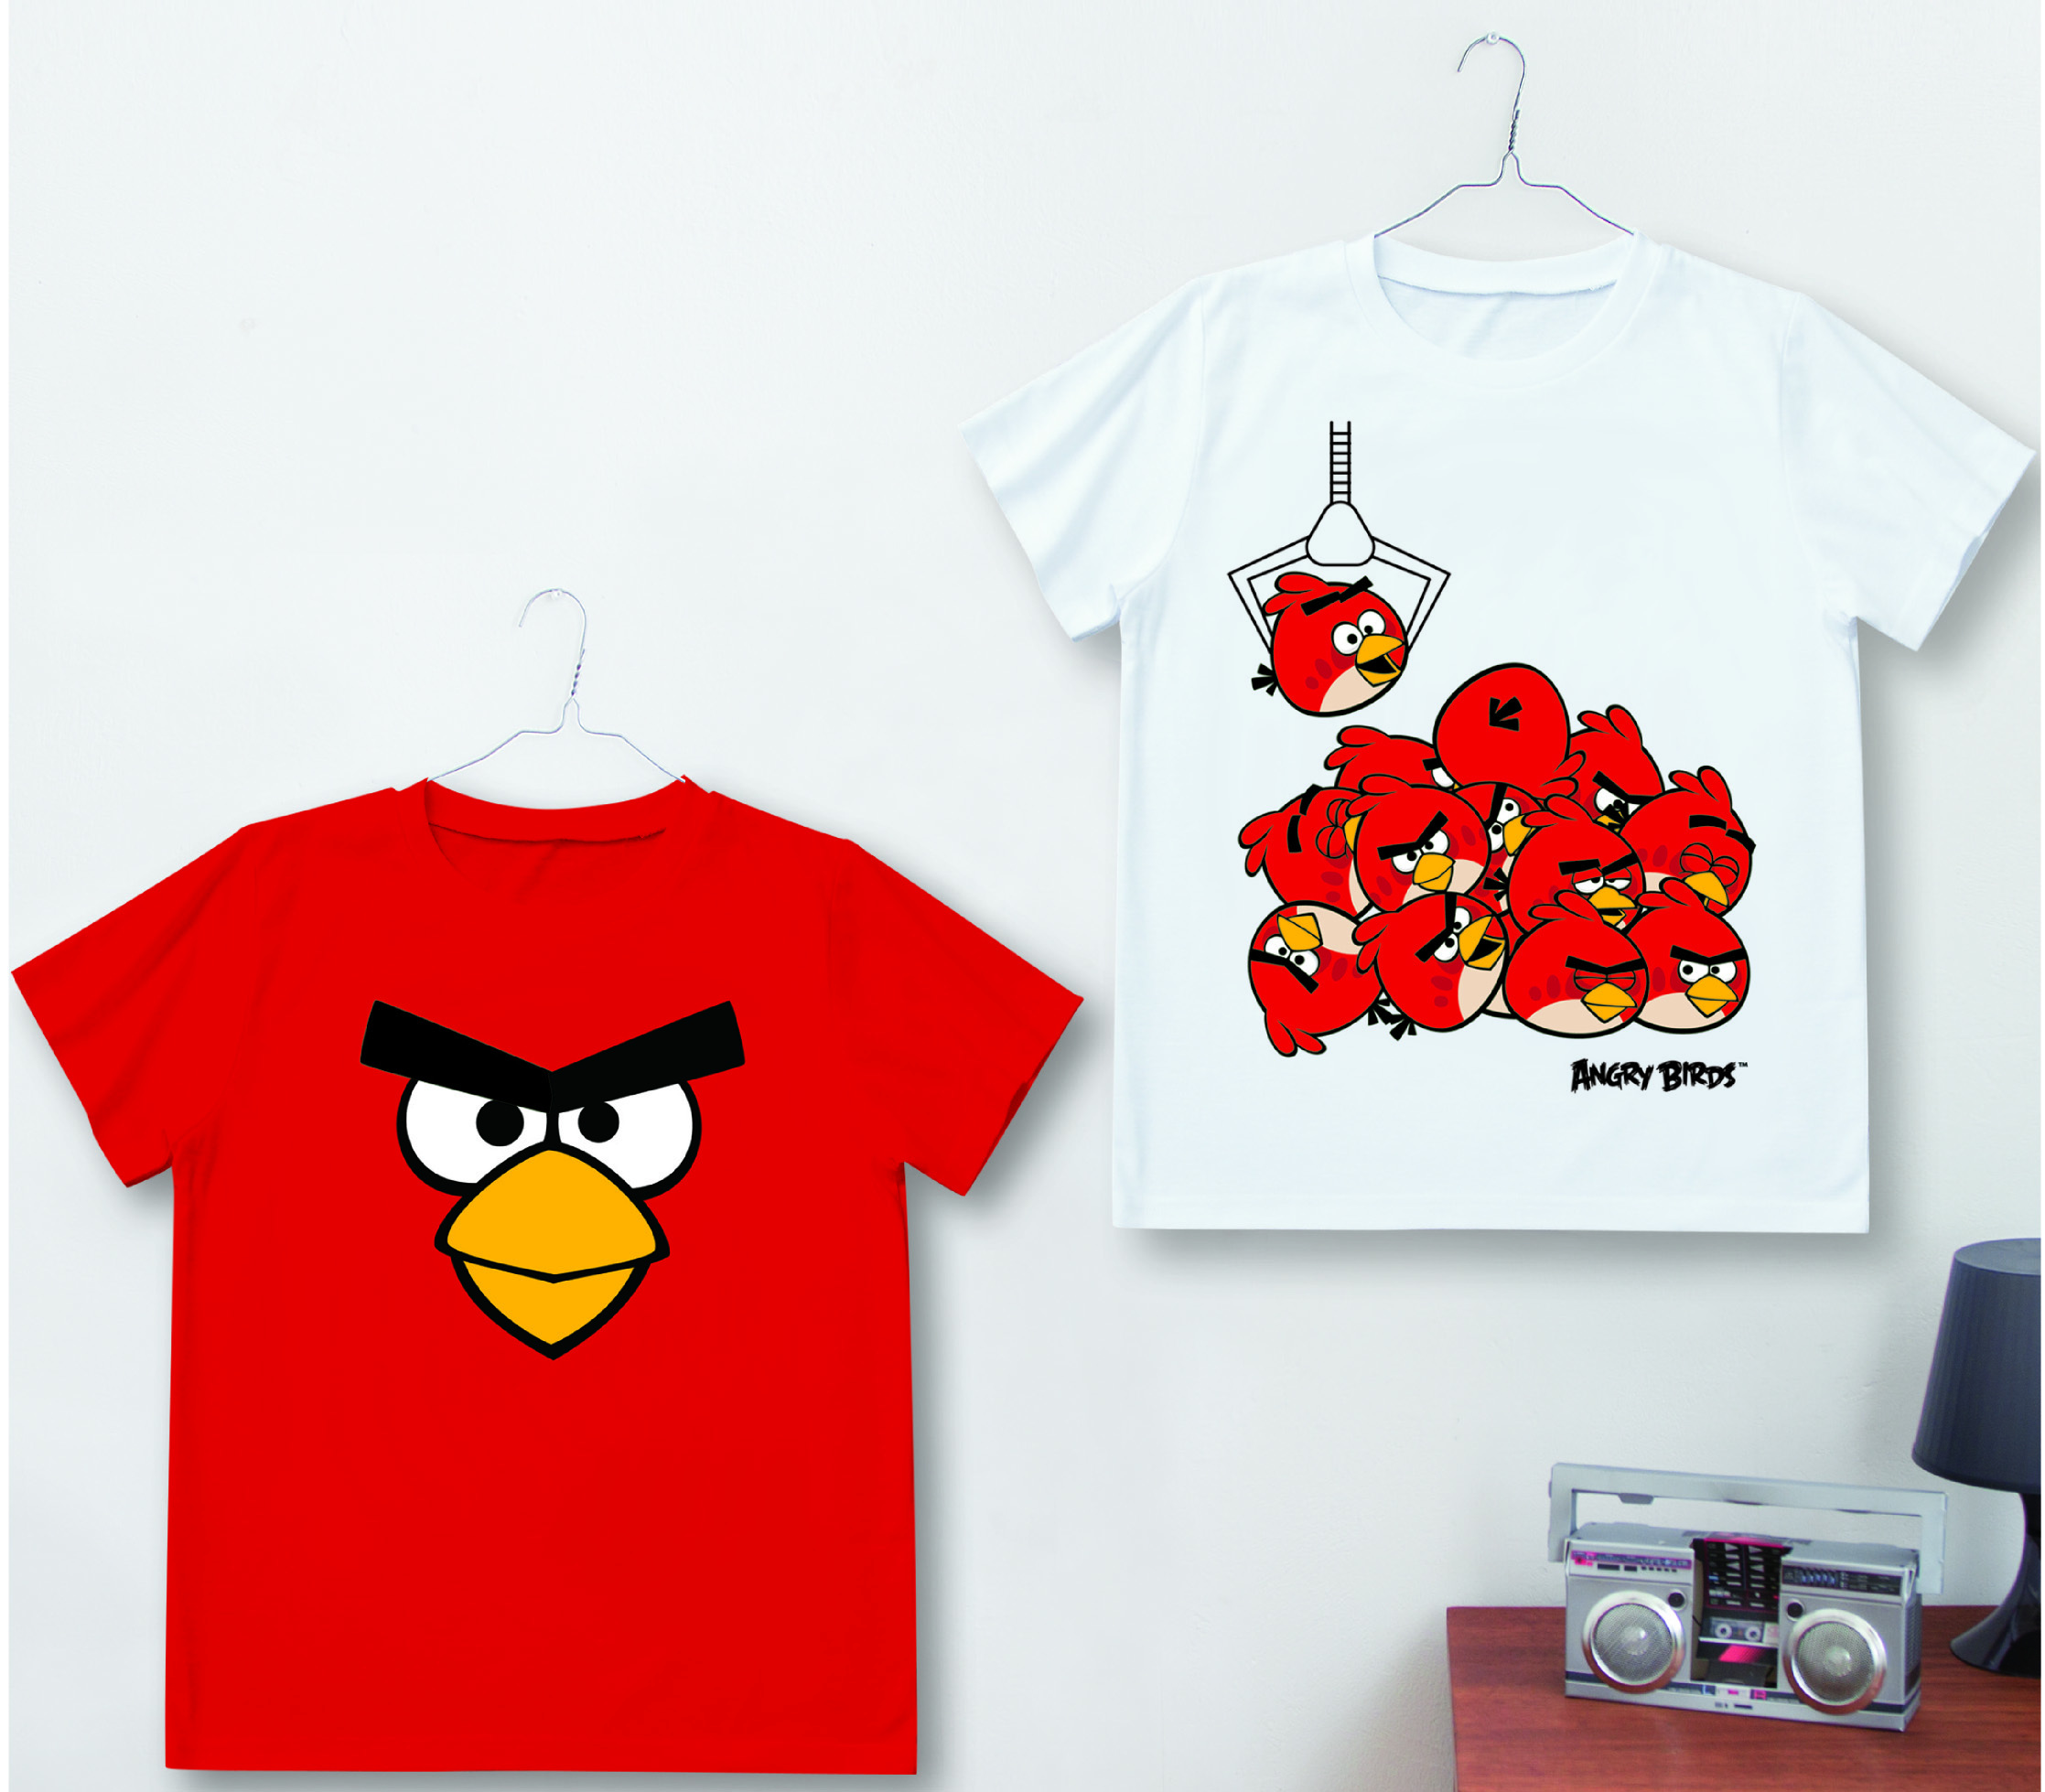 Angry Birds アングリーバード のクレーンゲーム景品 ｔシャツやプチマスコットが3月上旬発売 フリュー株式会社のプレスリリース